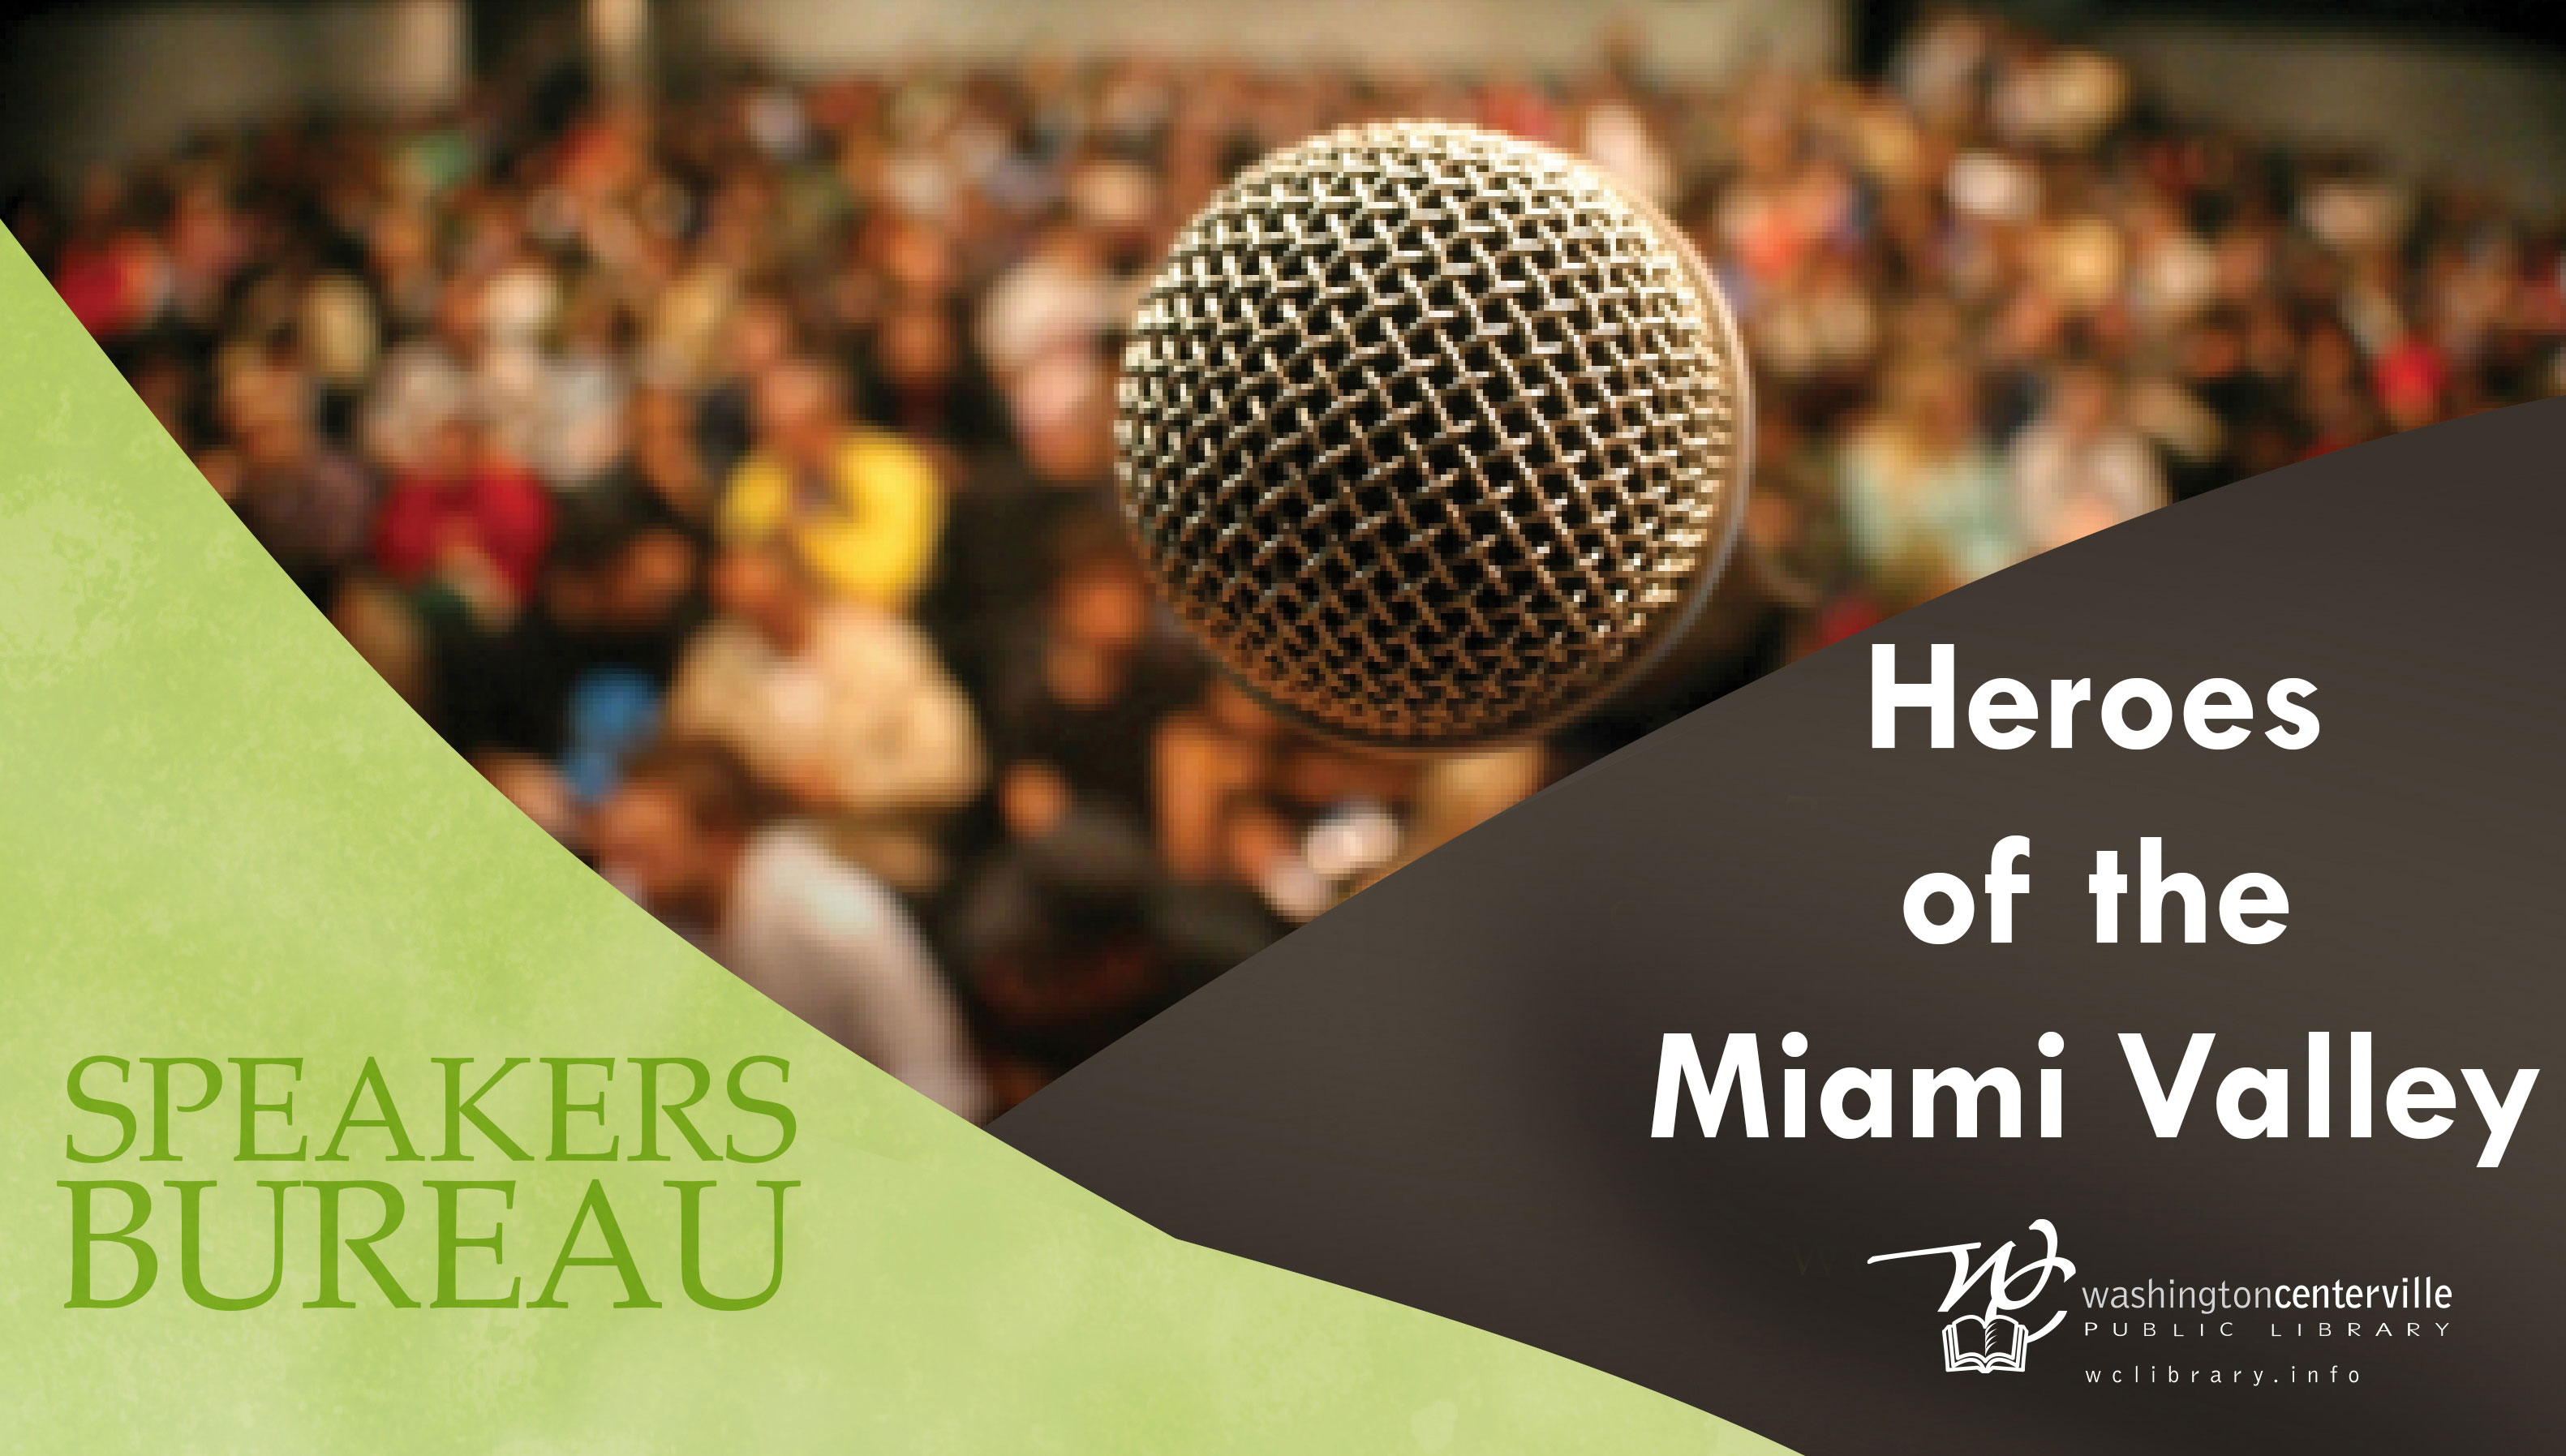 Speakers Bureau: Heroes of the Miami Valley